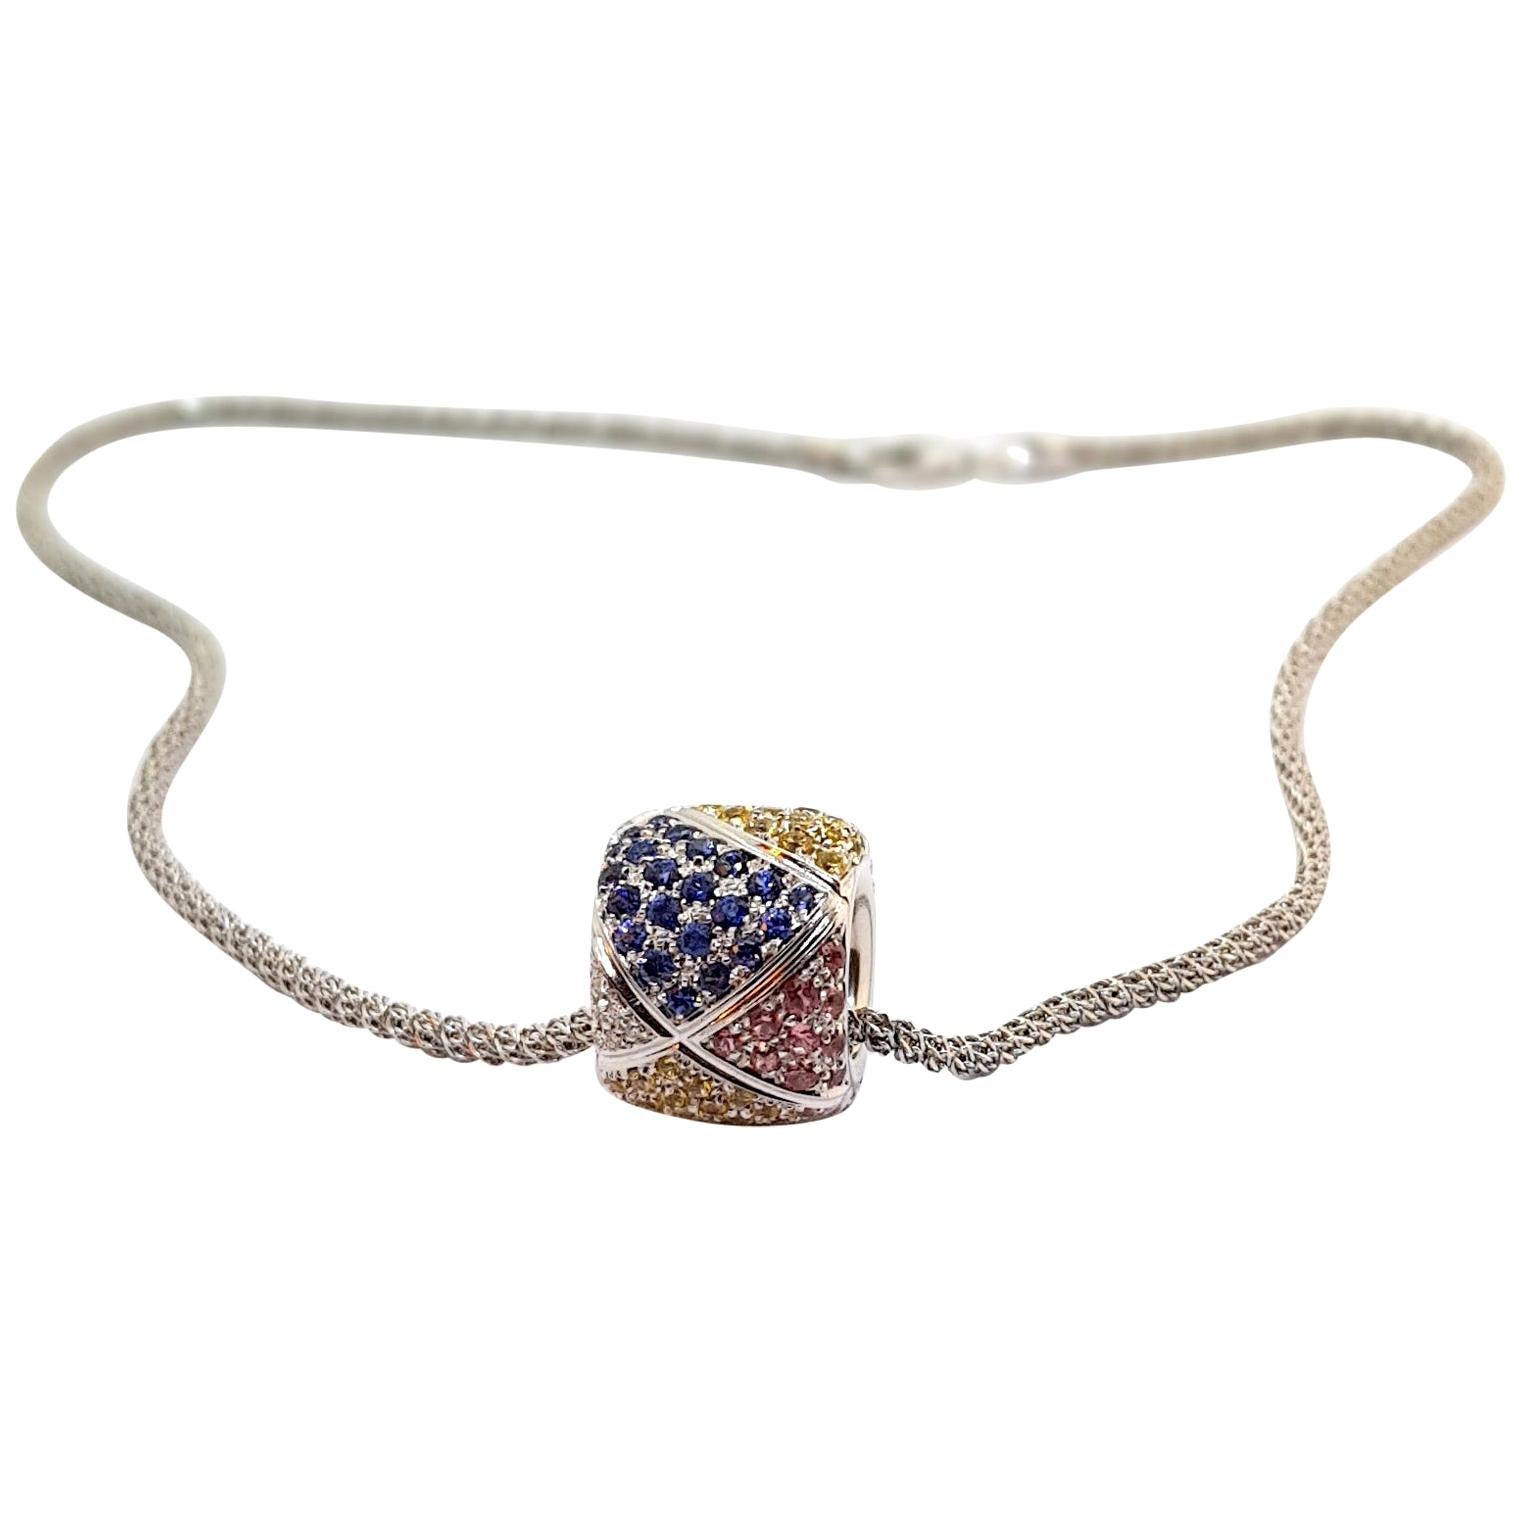 Valente Clash 18.6 Carat Multicolored Sapphires 18 Karat Gold Pendant Necklace